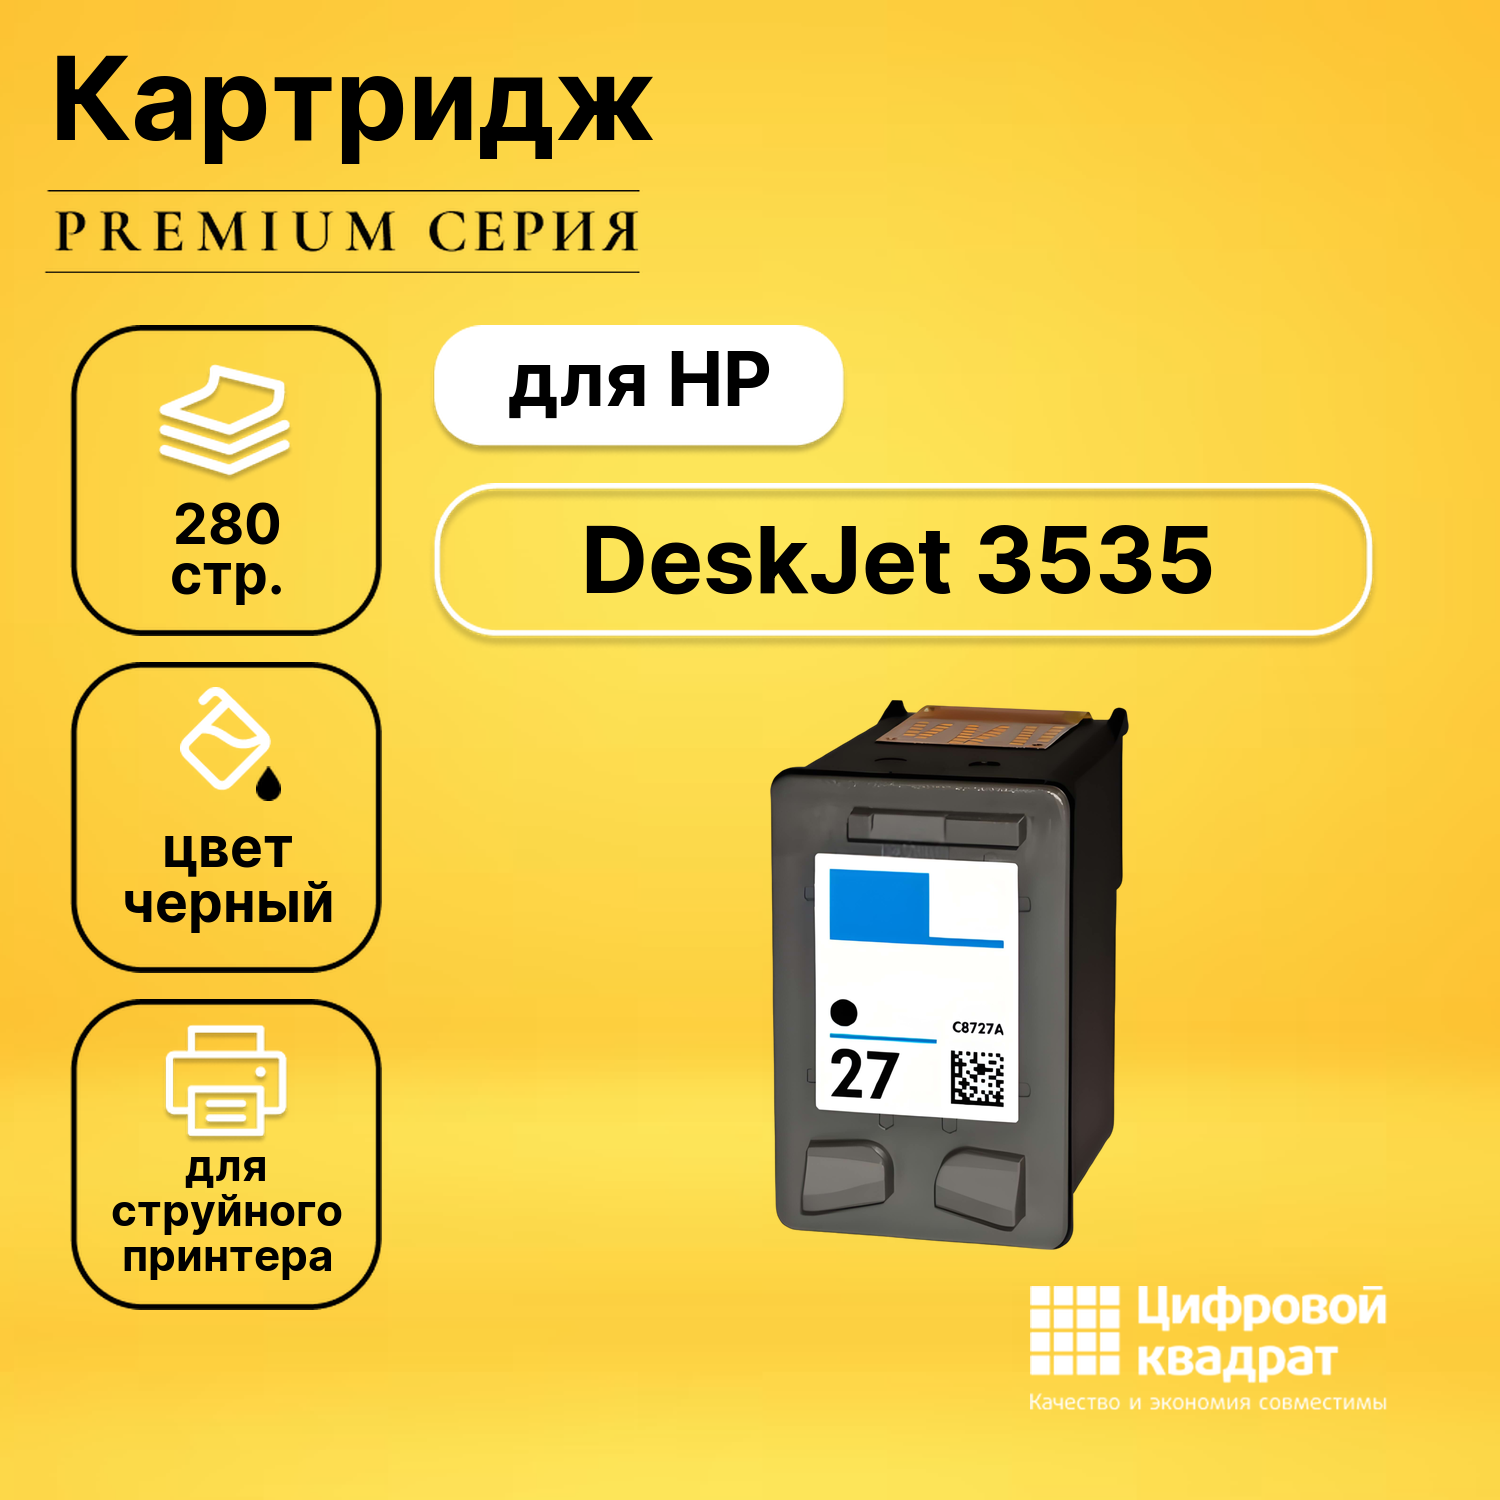 Картридж DS для HP DeskJet 3535 совместимый